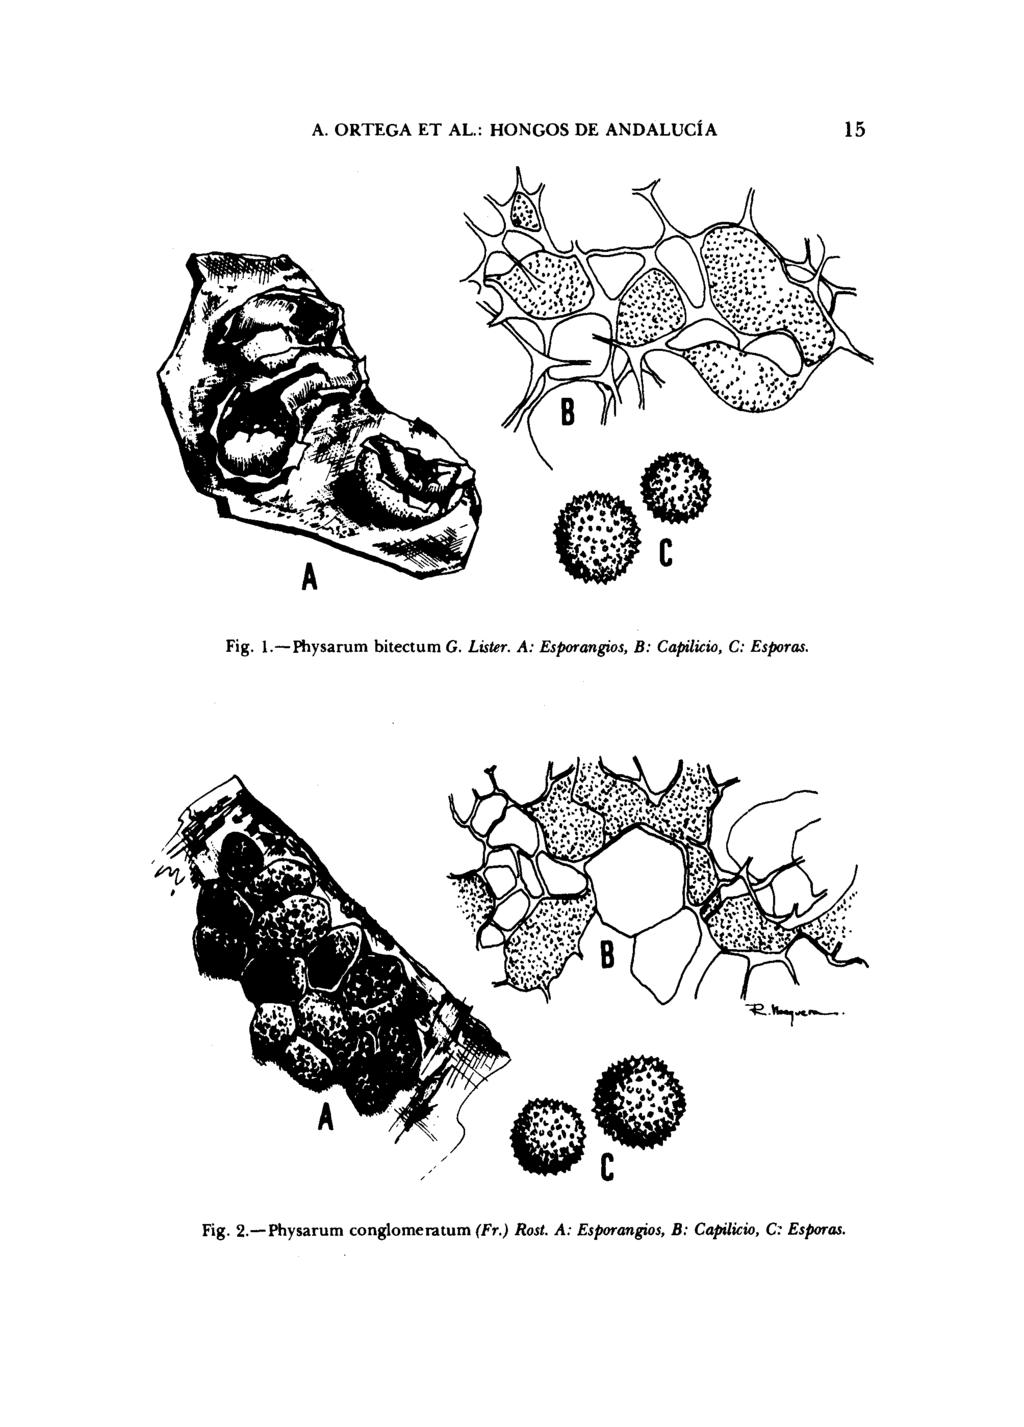 A. ORTEGA ET AL.: HONGOS DE ANDALUC~A Fig. l.-physarum bitectum C. Lirier.